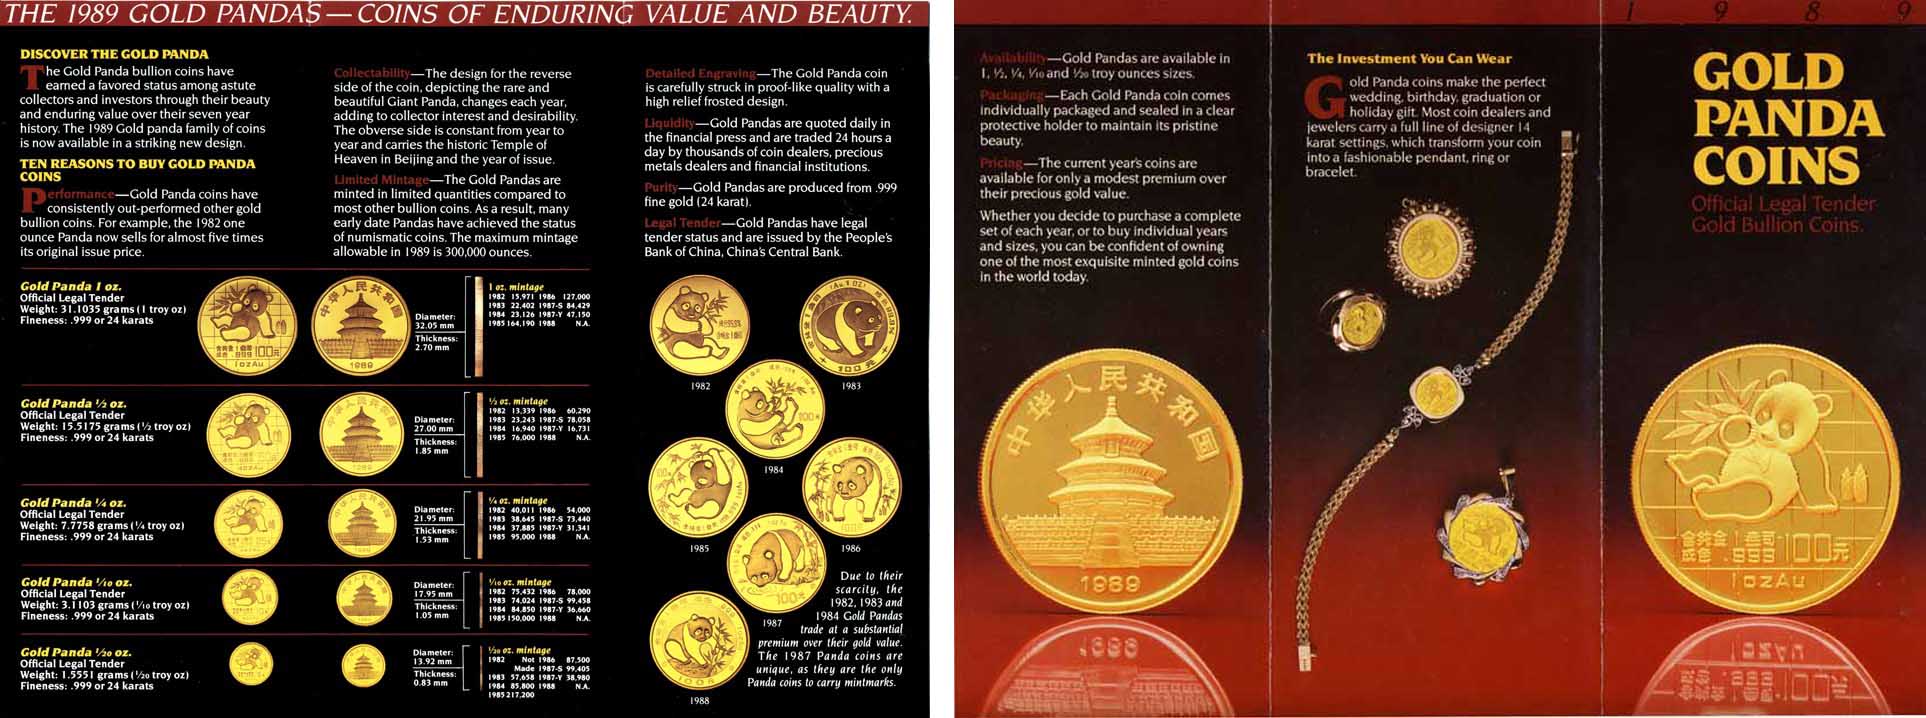 Gold Panda Coin Brochure 1989